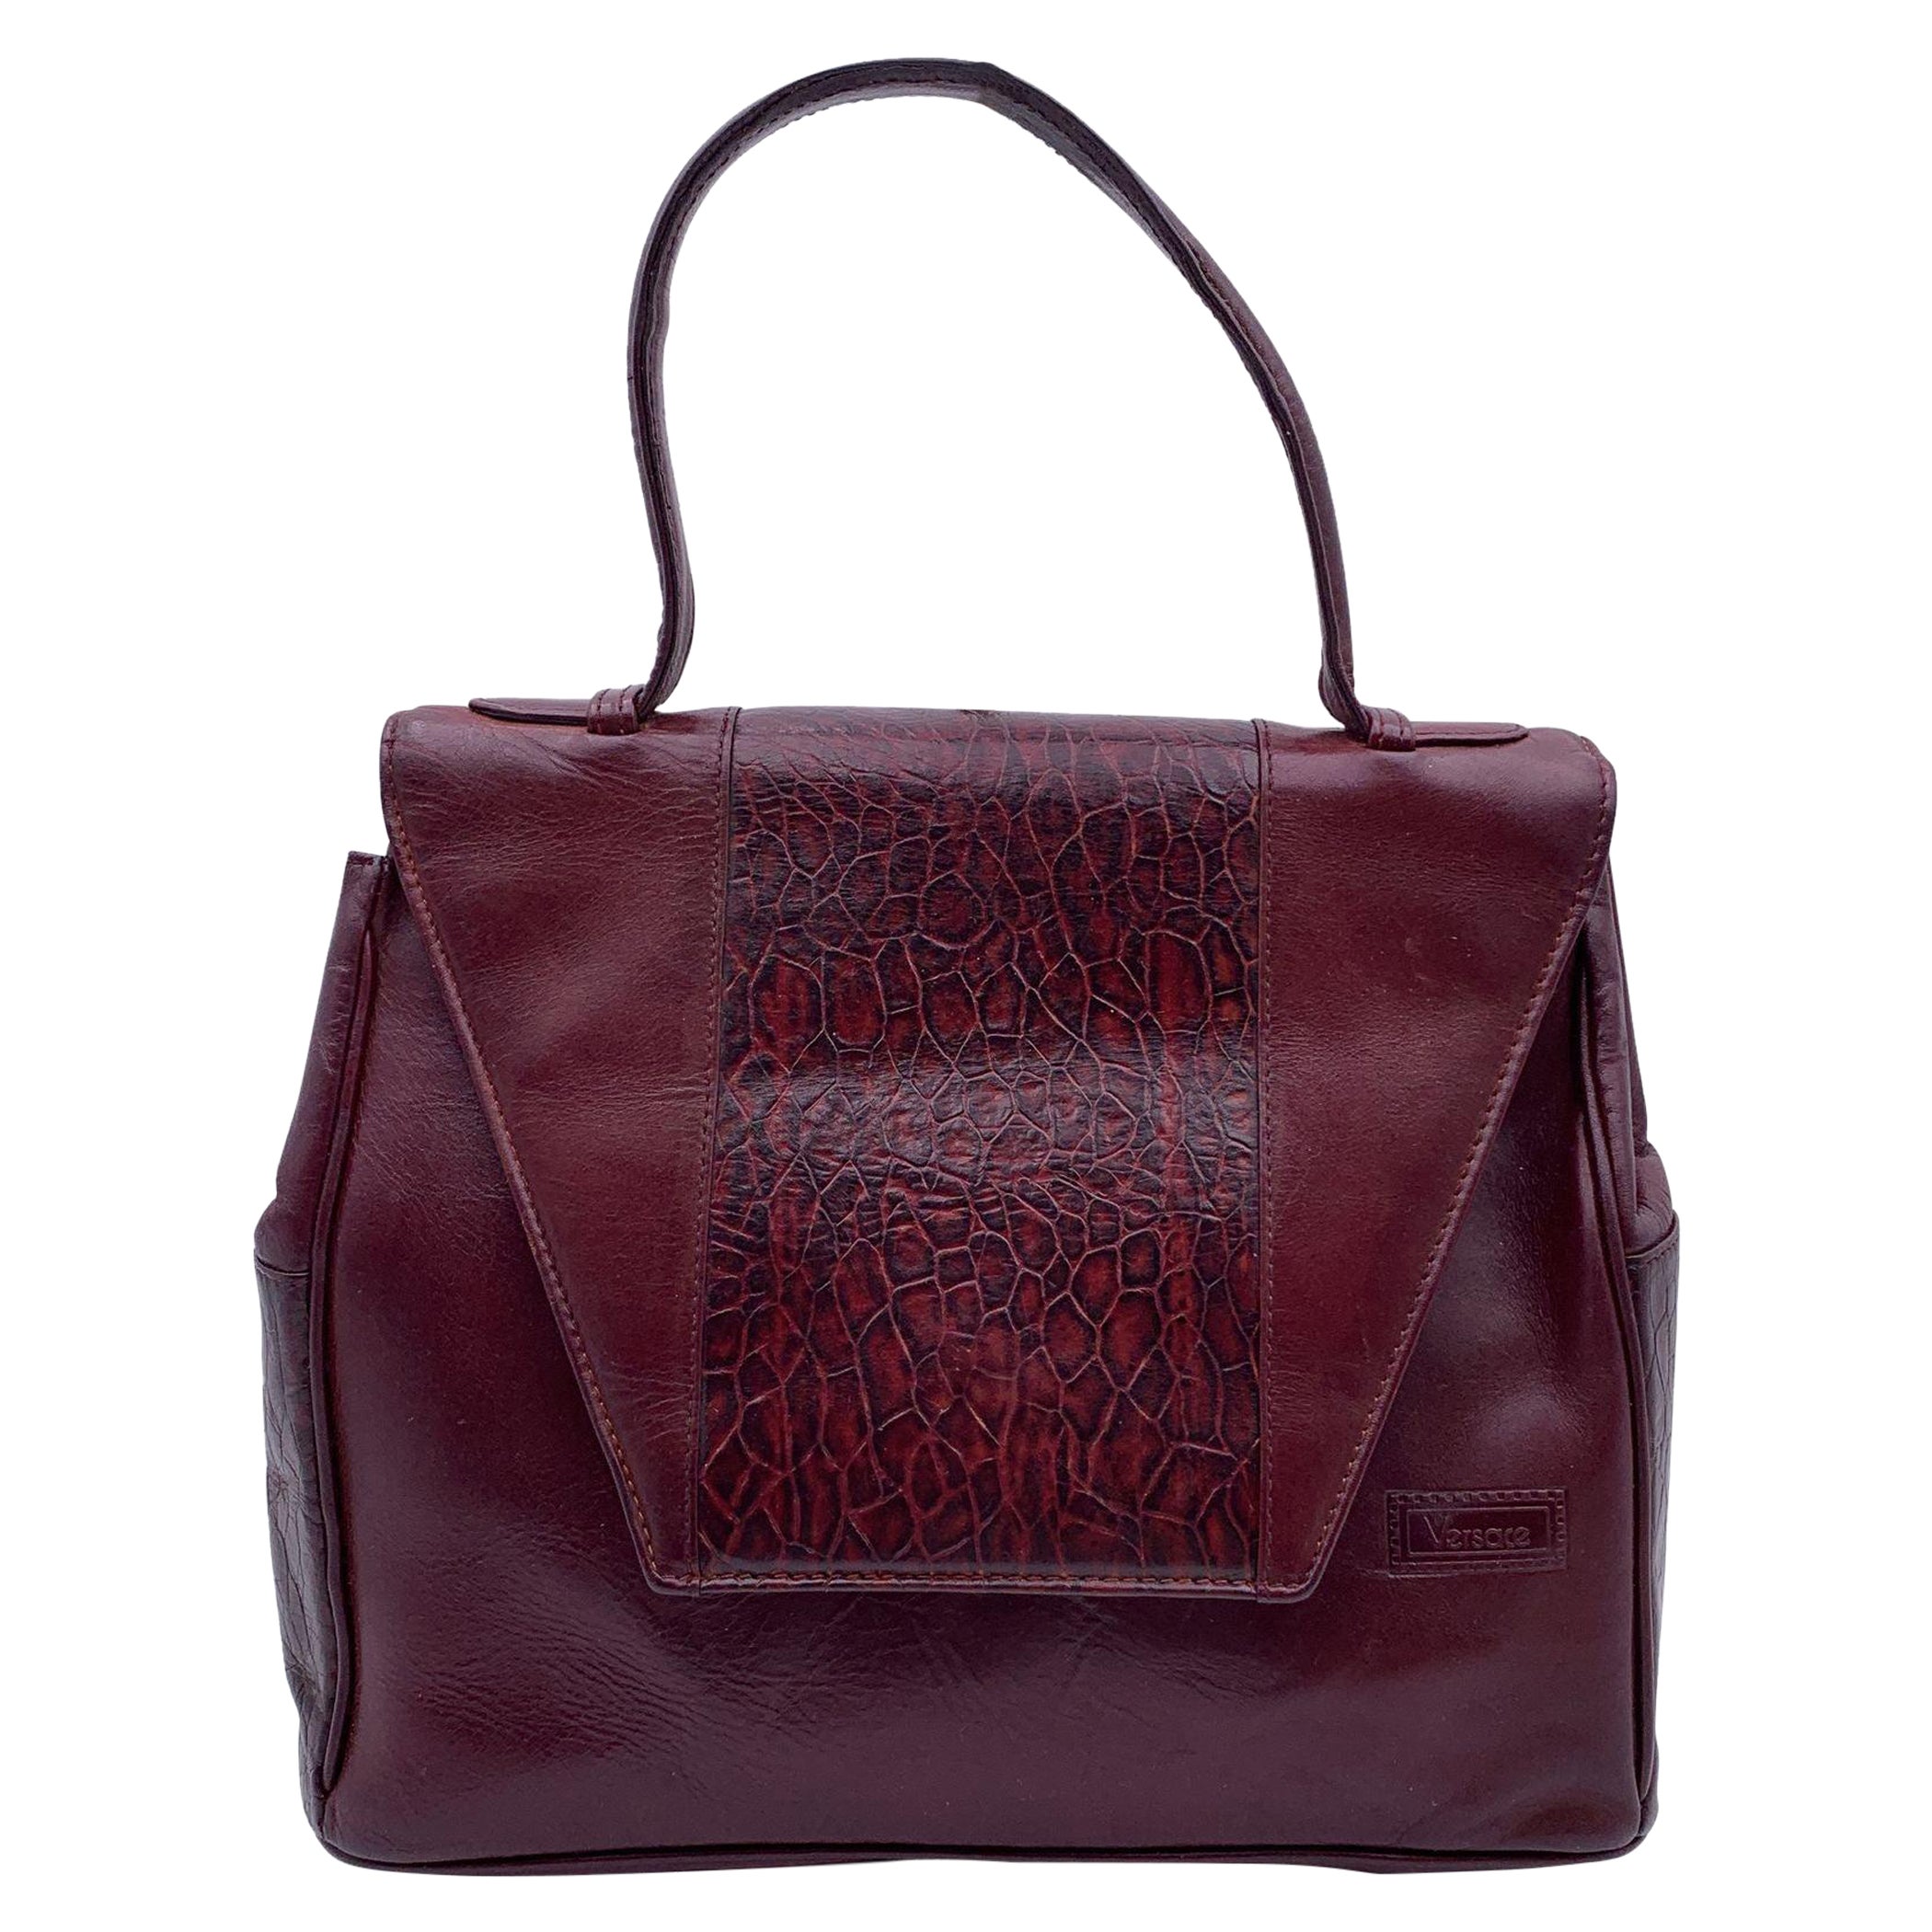 Gianni Versace Vintage Burgundy Embossed Leather Handbag Satchel For Sale